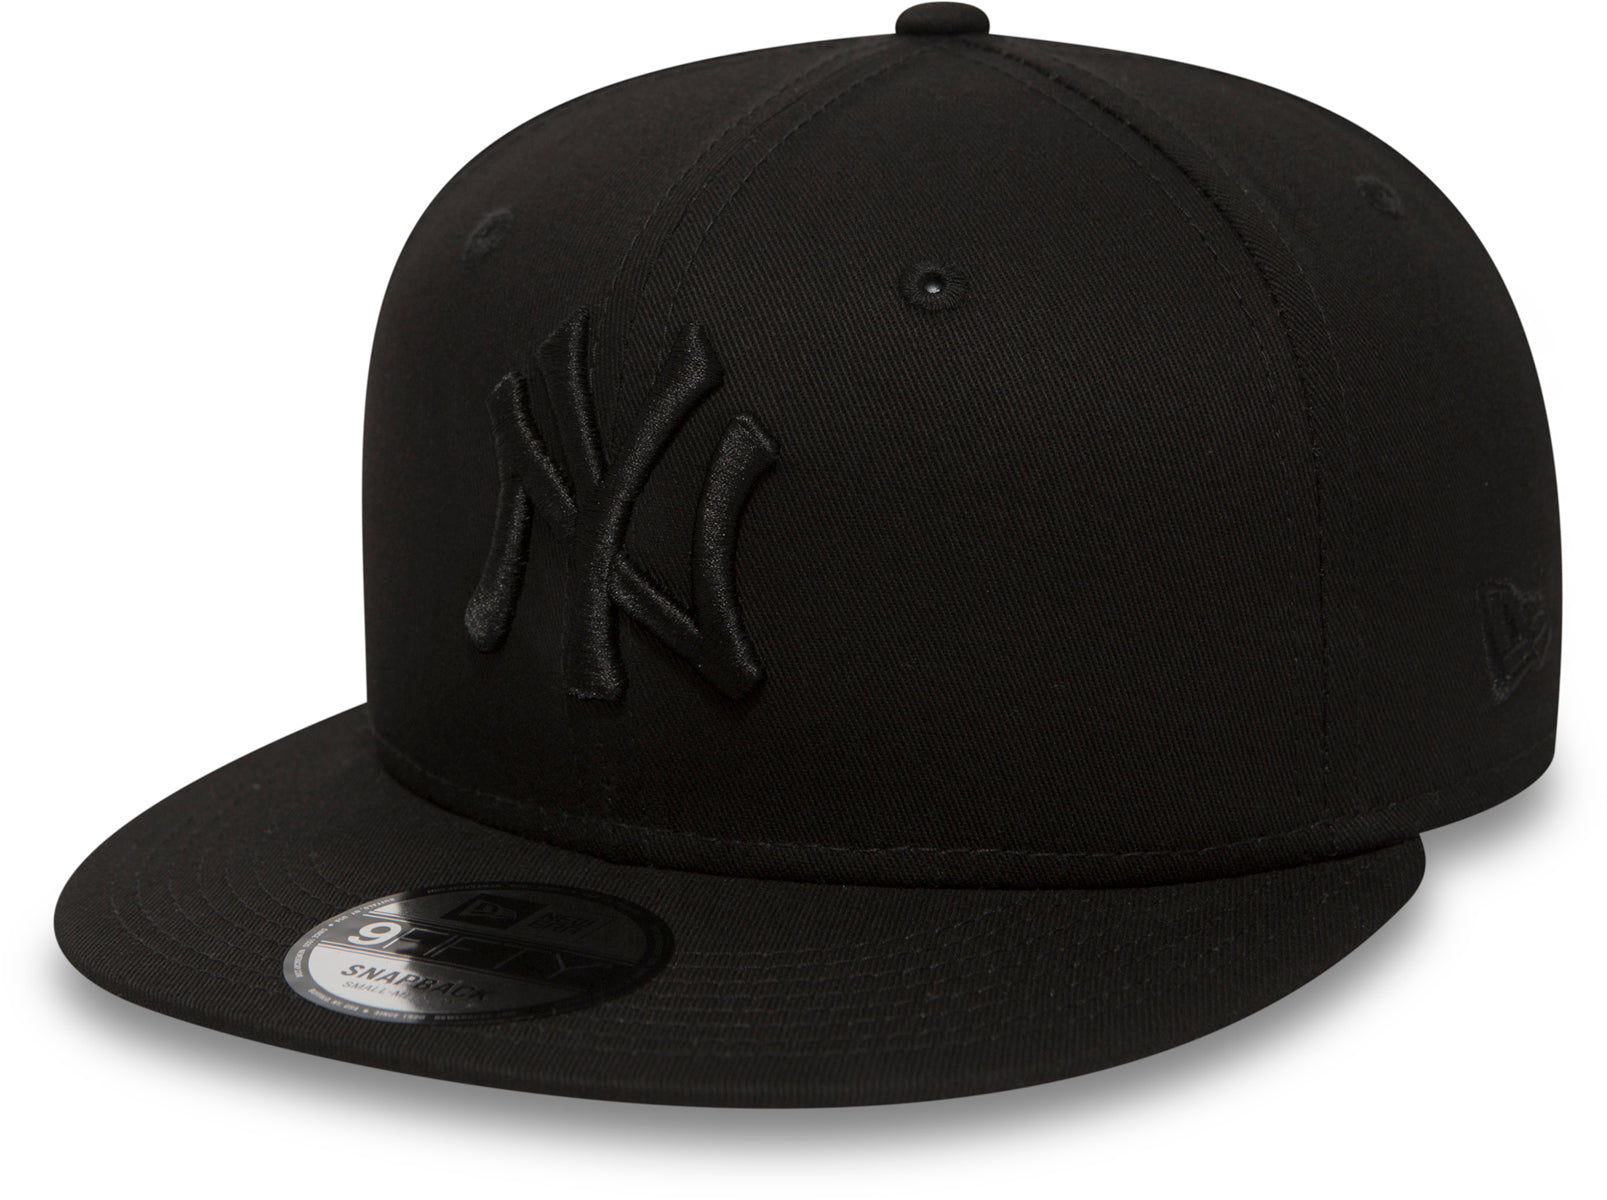 New New Era 9Fifty All Black Snapback Baseball Cap – lovemycap